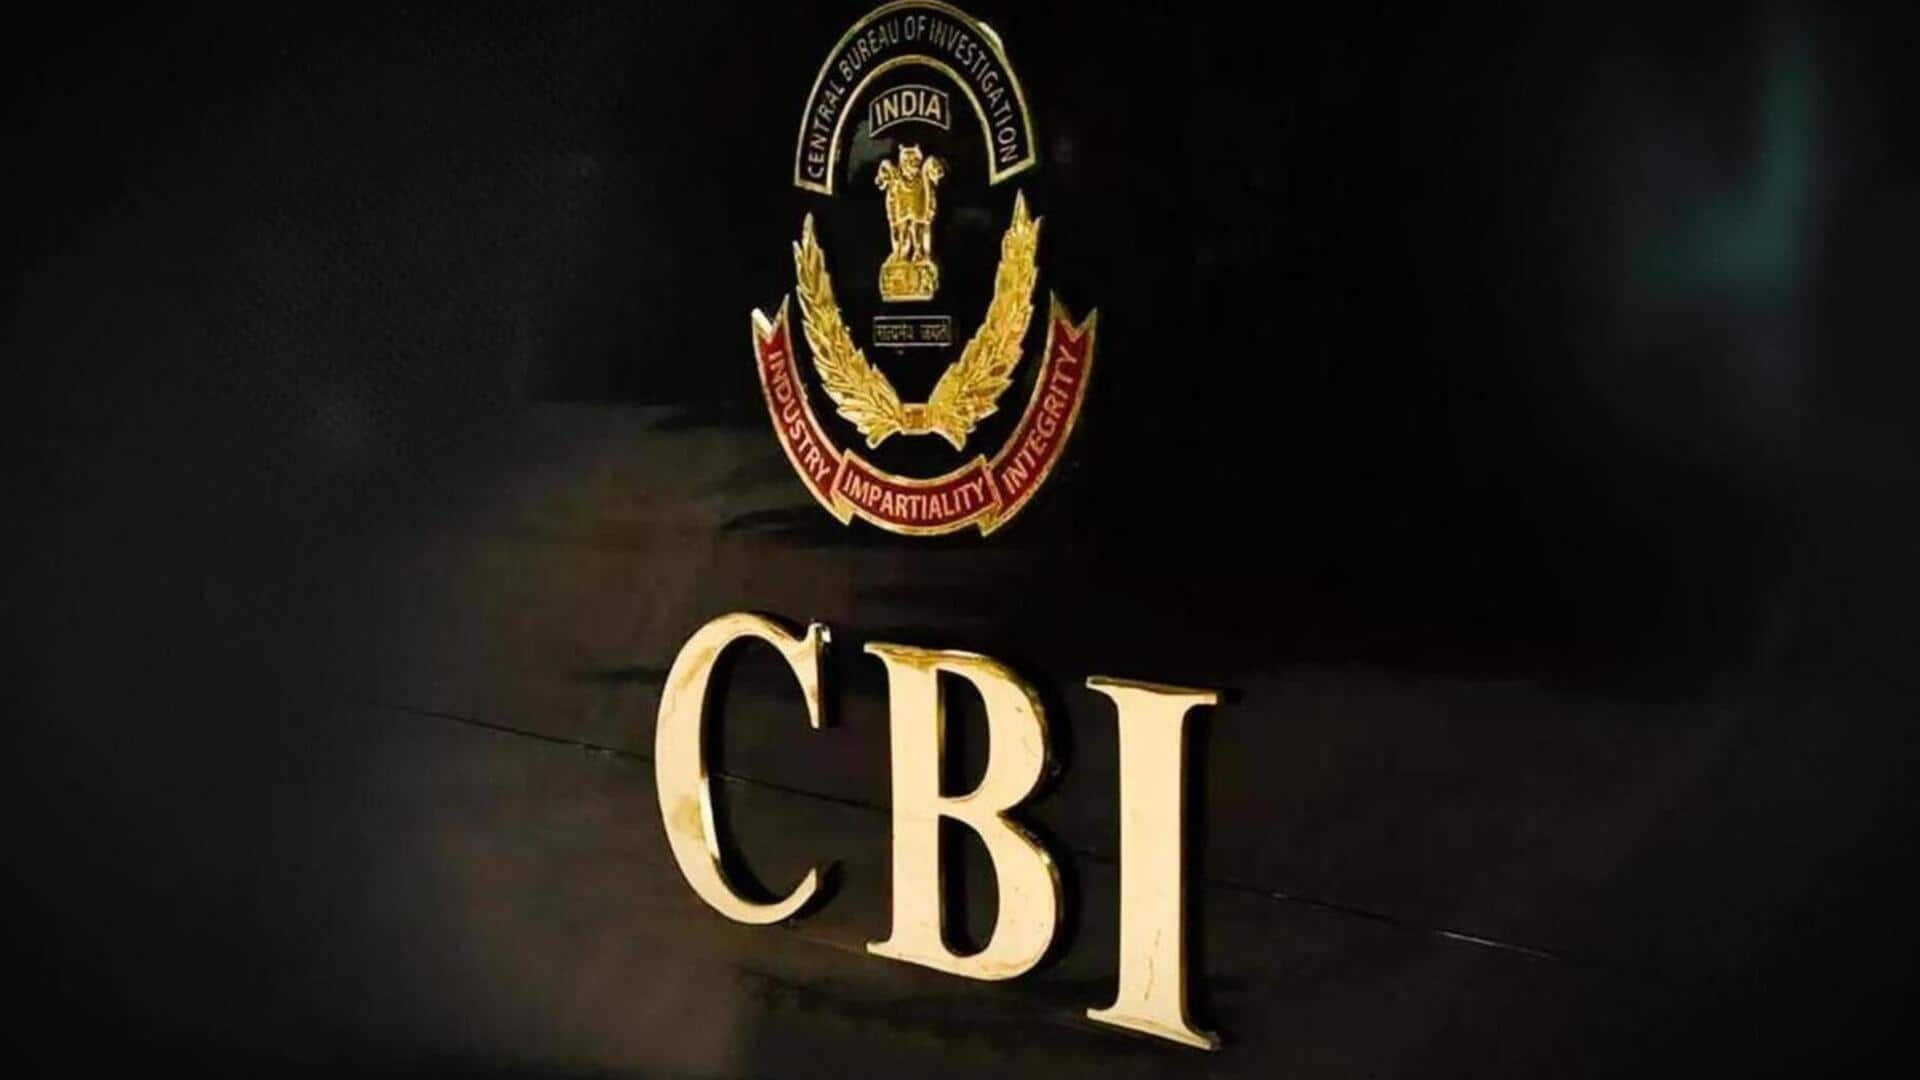 CBI launches 'Operation Chakra II' to combat cybercrime gangs